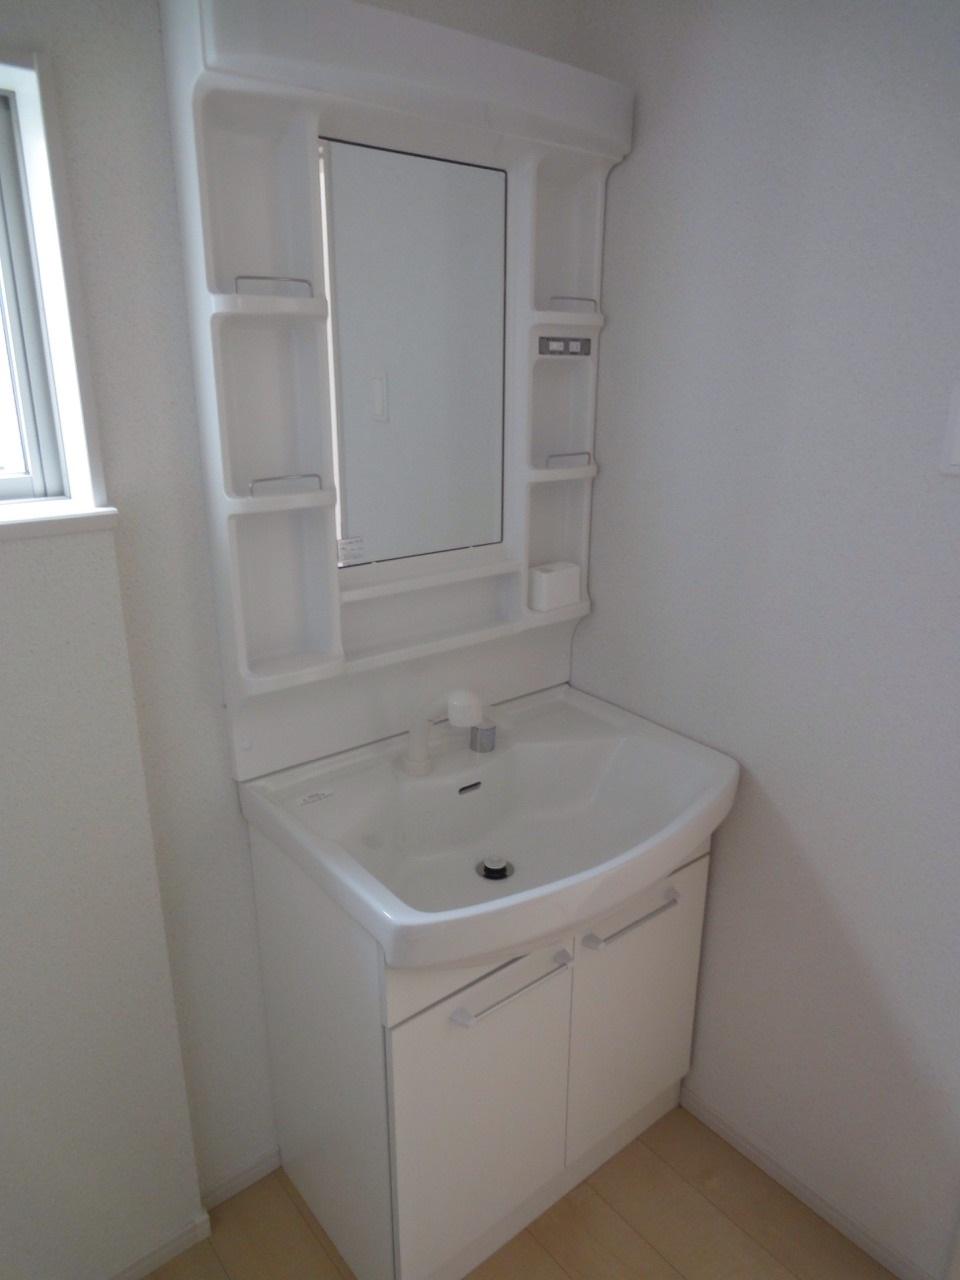 Wash basin, toilet. (2013.12.20 shooting)